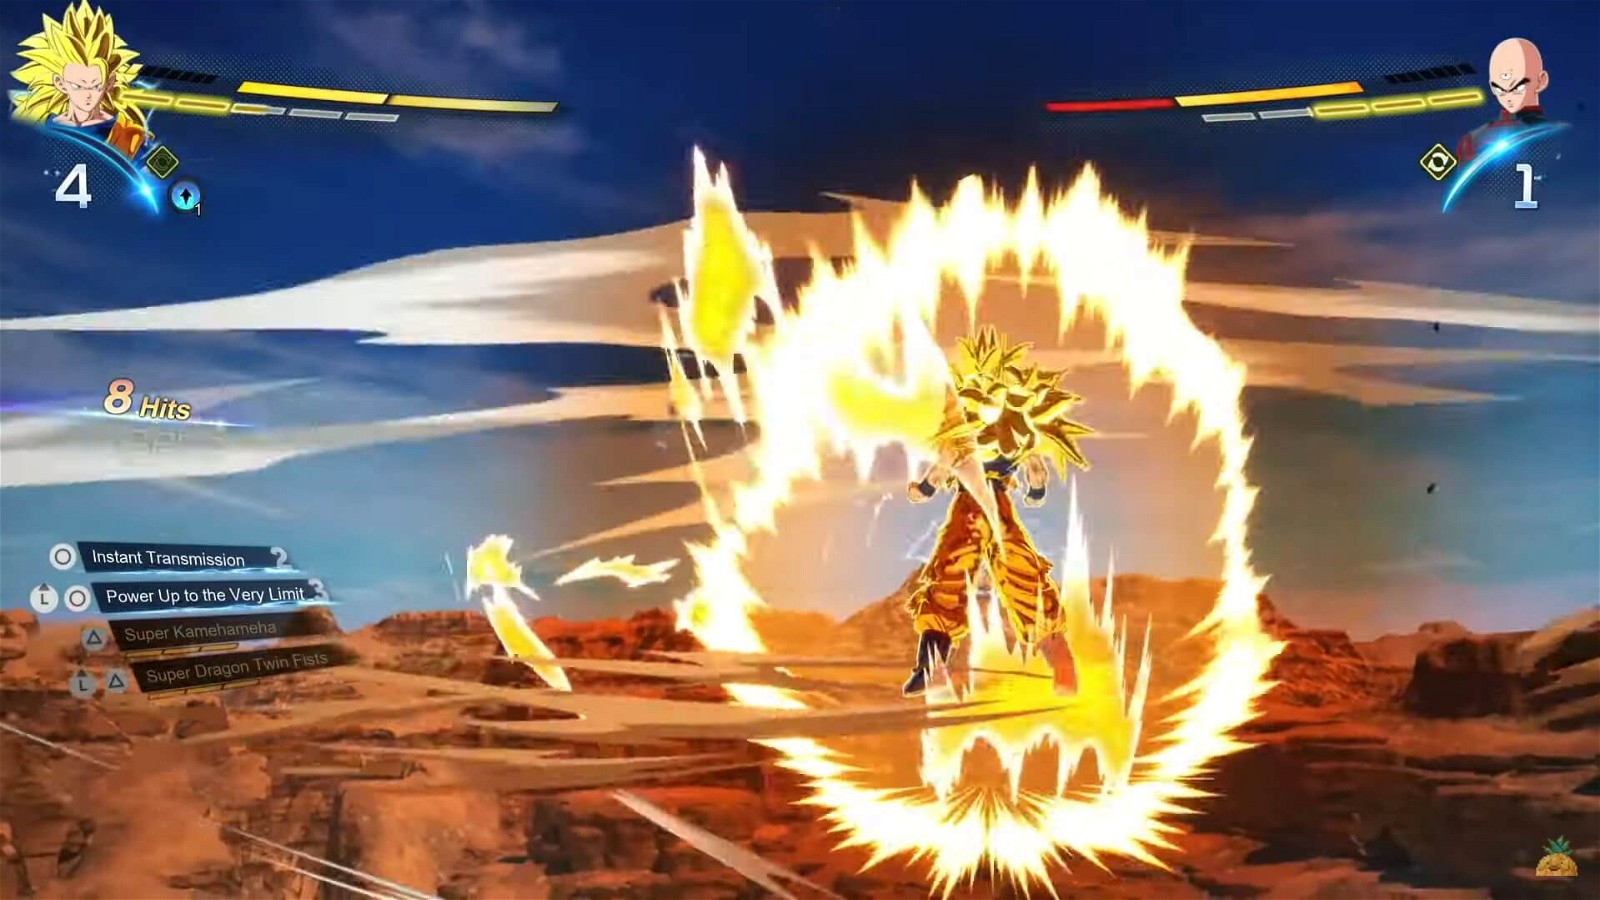 Goku Super Saiyan 3 charging his ki in the Rocky Area. Credits: Vocal Pineapple Academia on YouTube